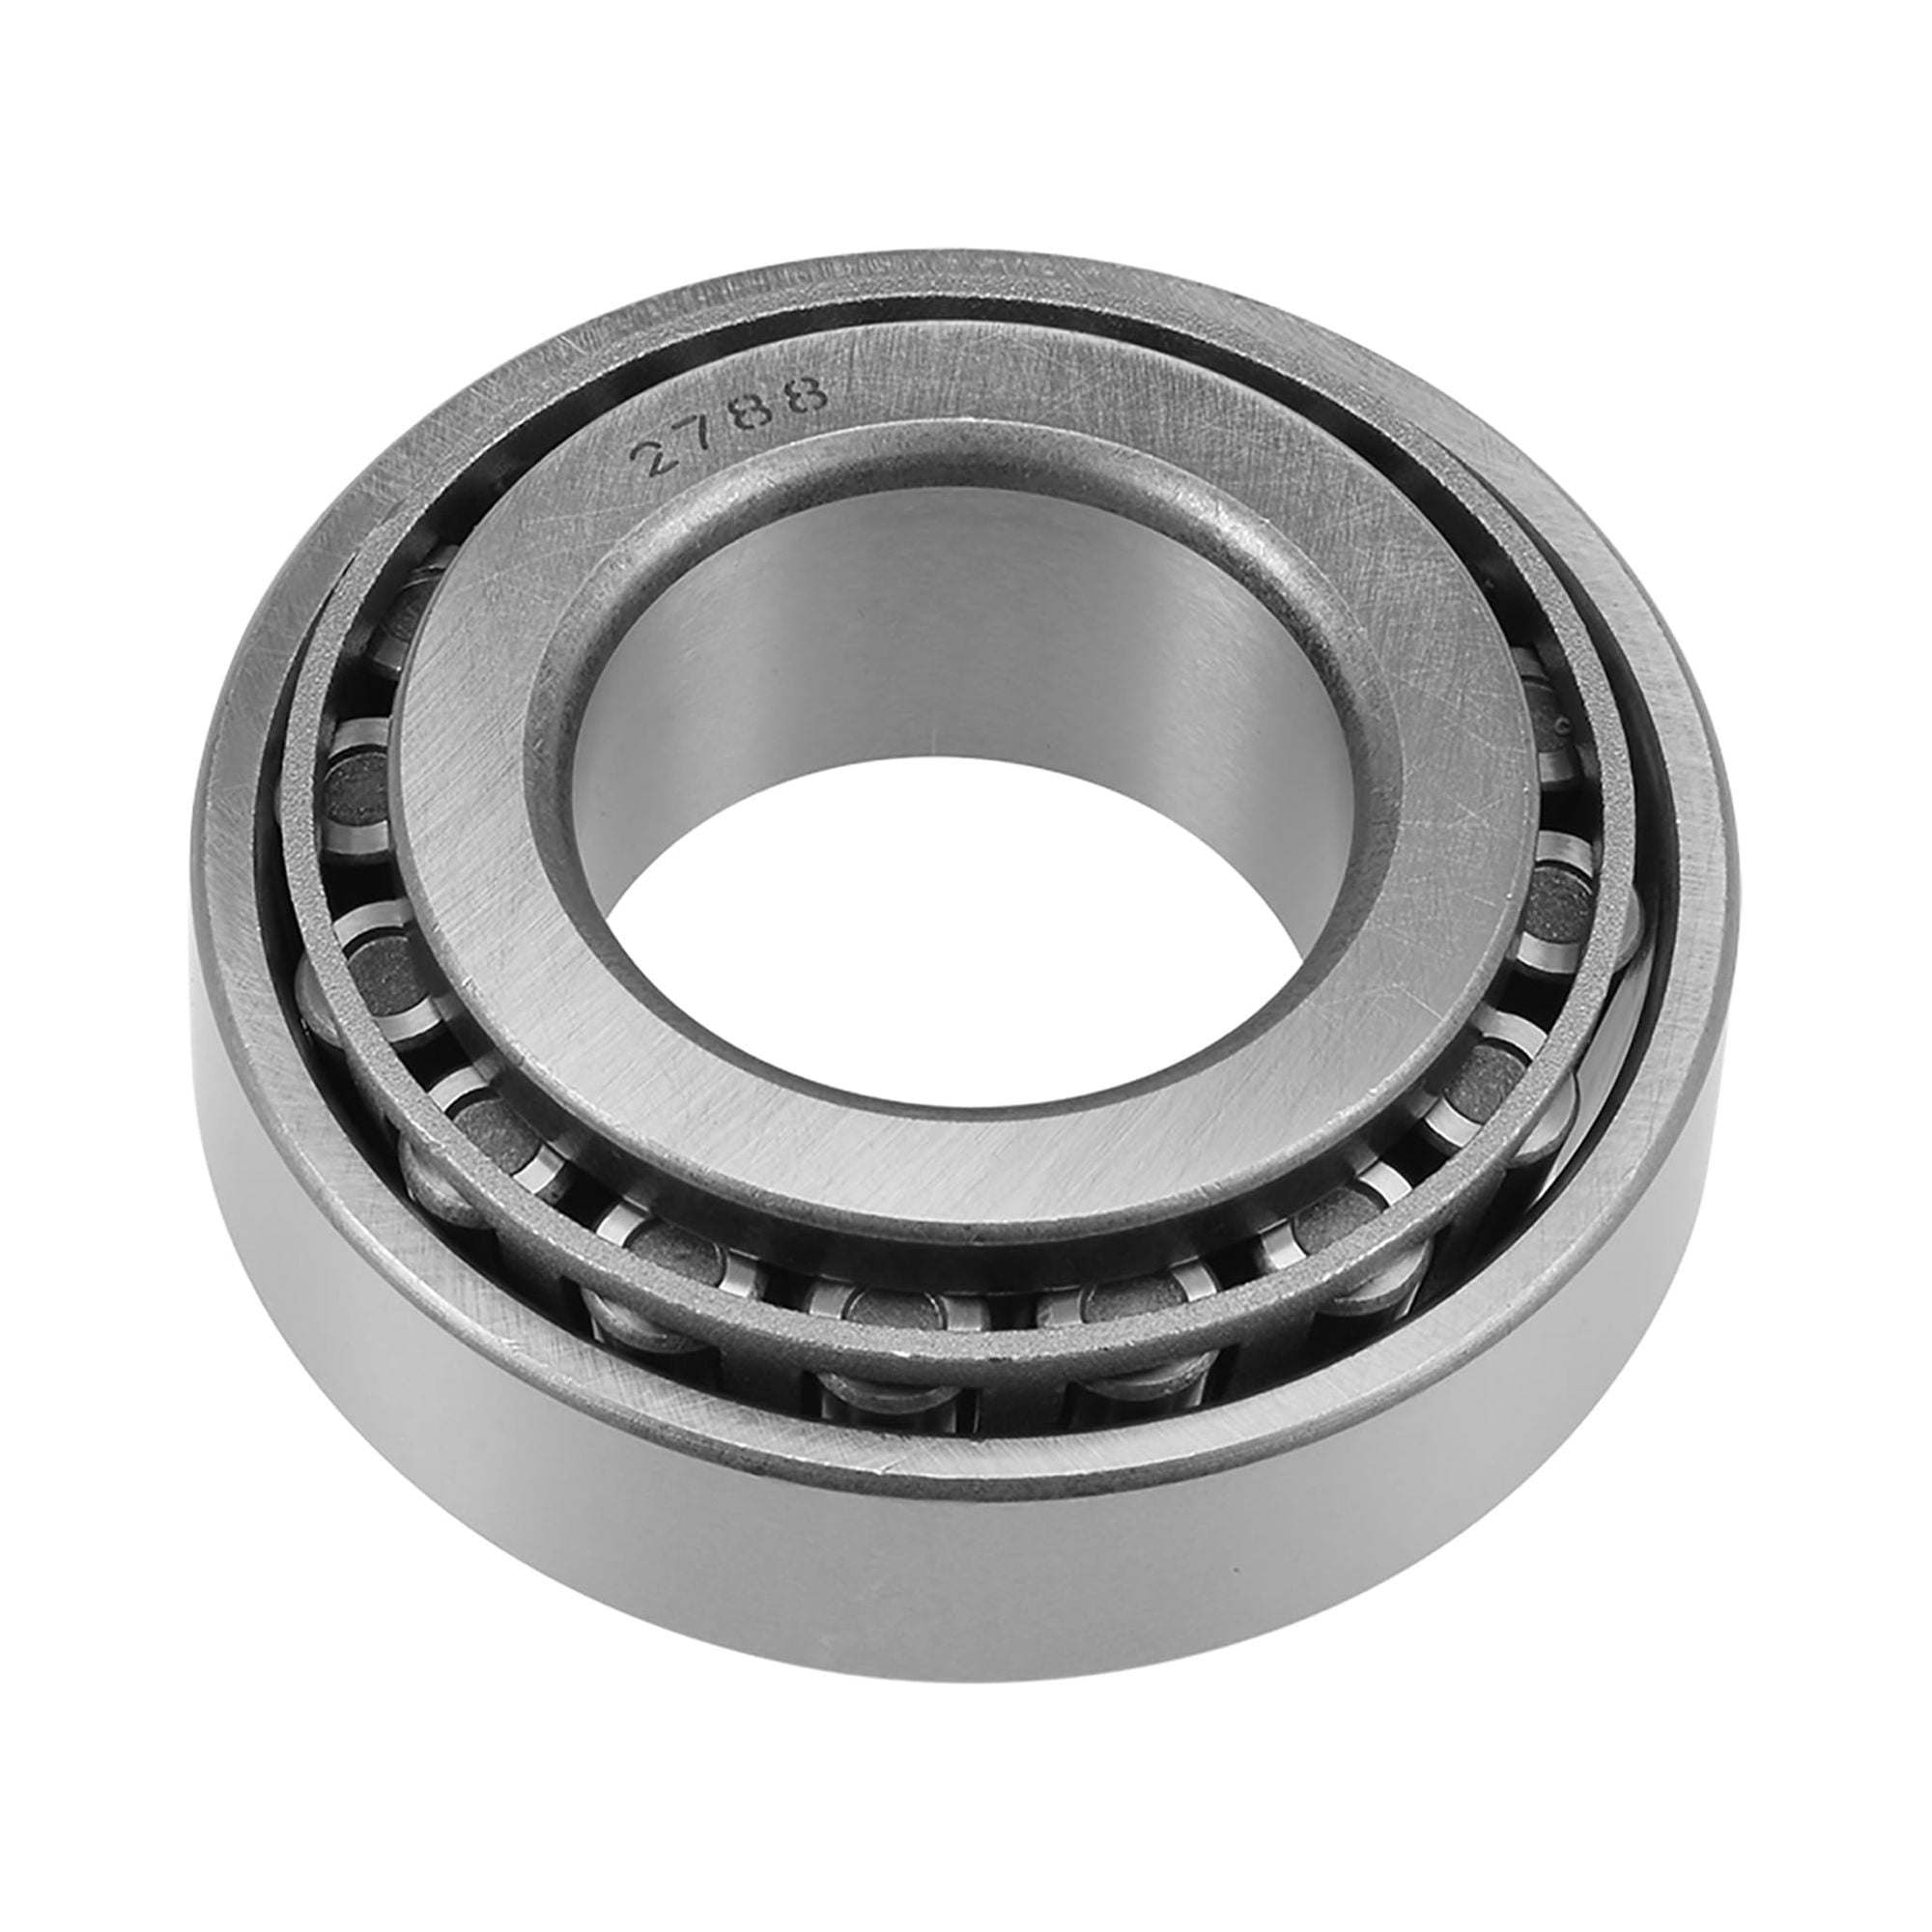 8E-4745: 50mm Outer Diameter Coned Disc Spring